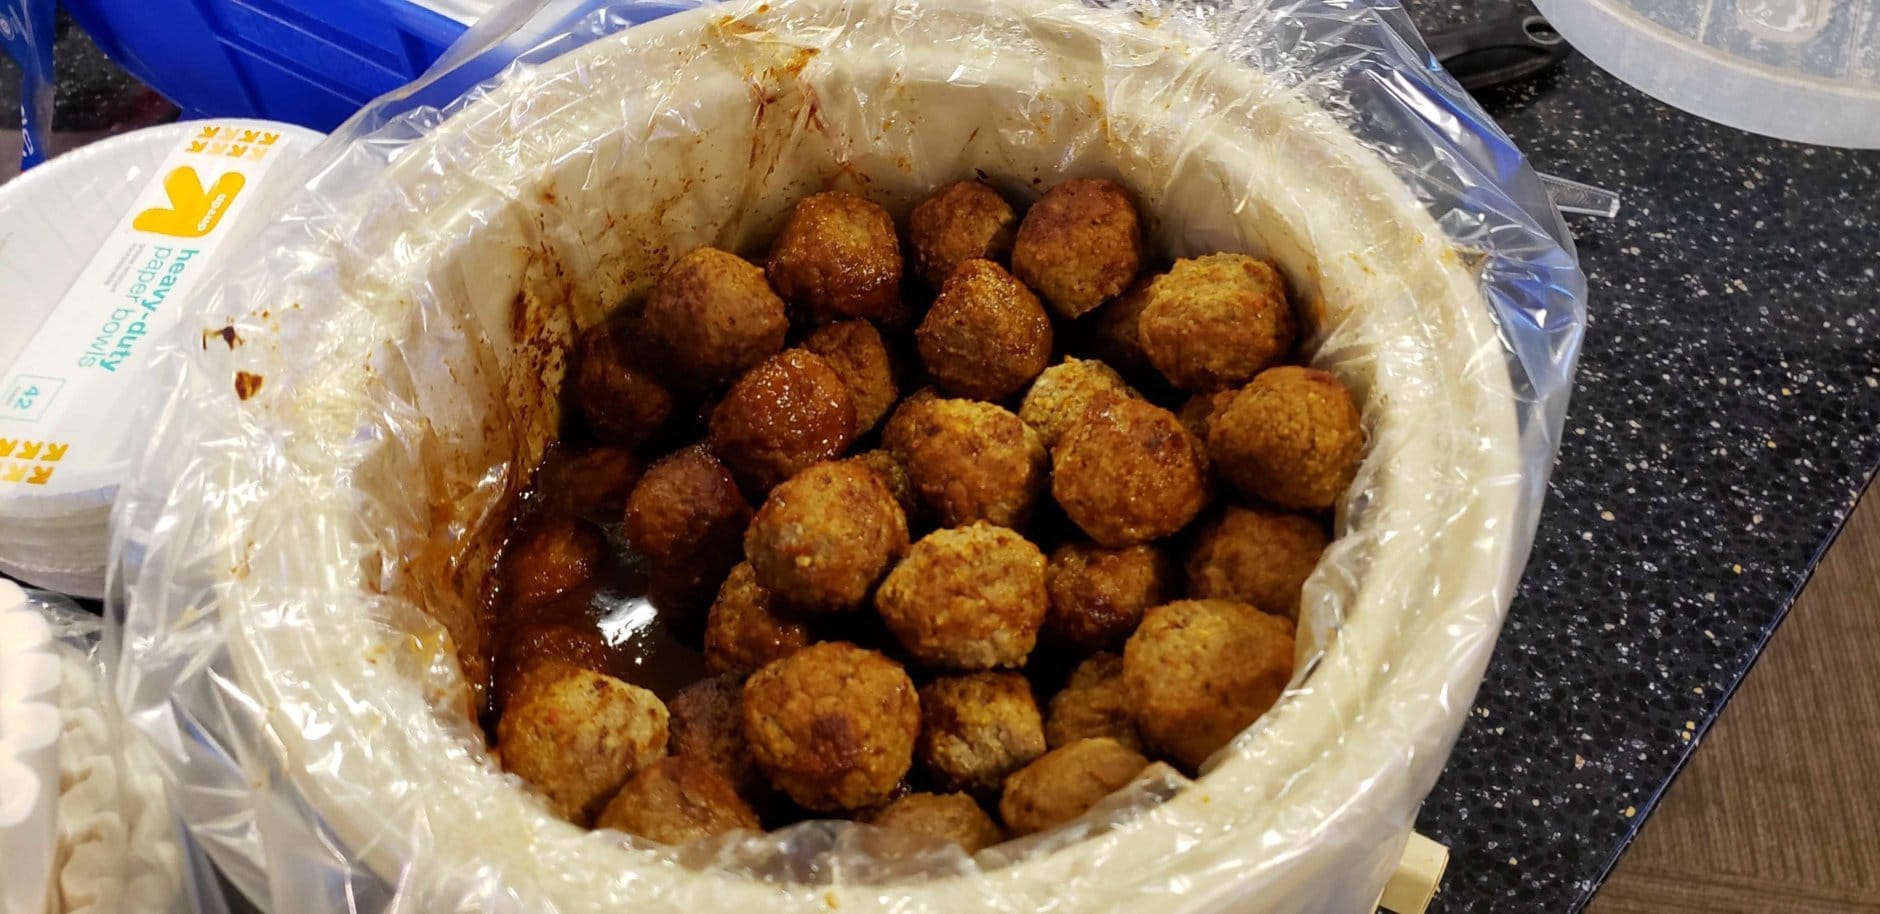 Digital editor Colleen Kelleher brought in meatballs. They were a hit. (WTOP/Brandon Millman) 